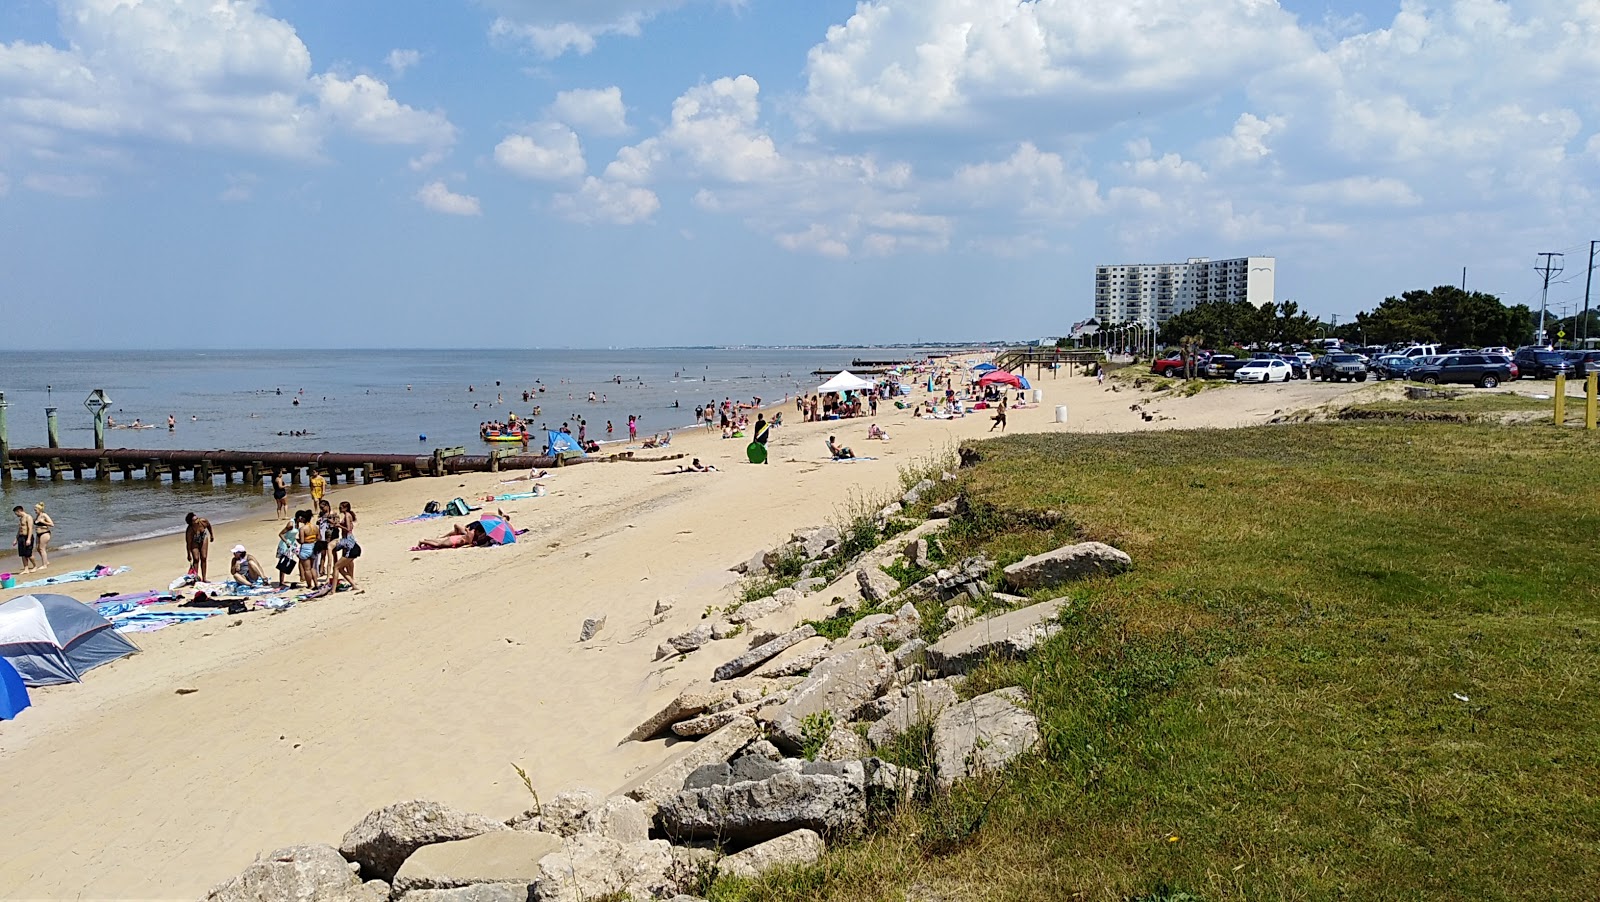 Foto af Ocean View beach - populært sted blandt afslapningskendere